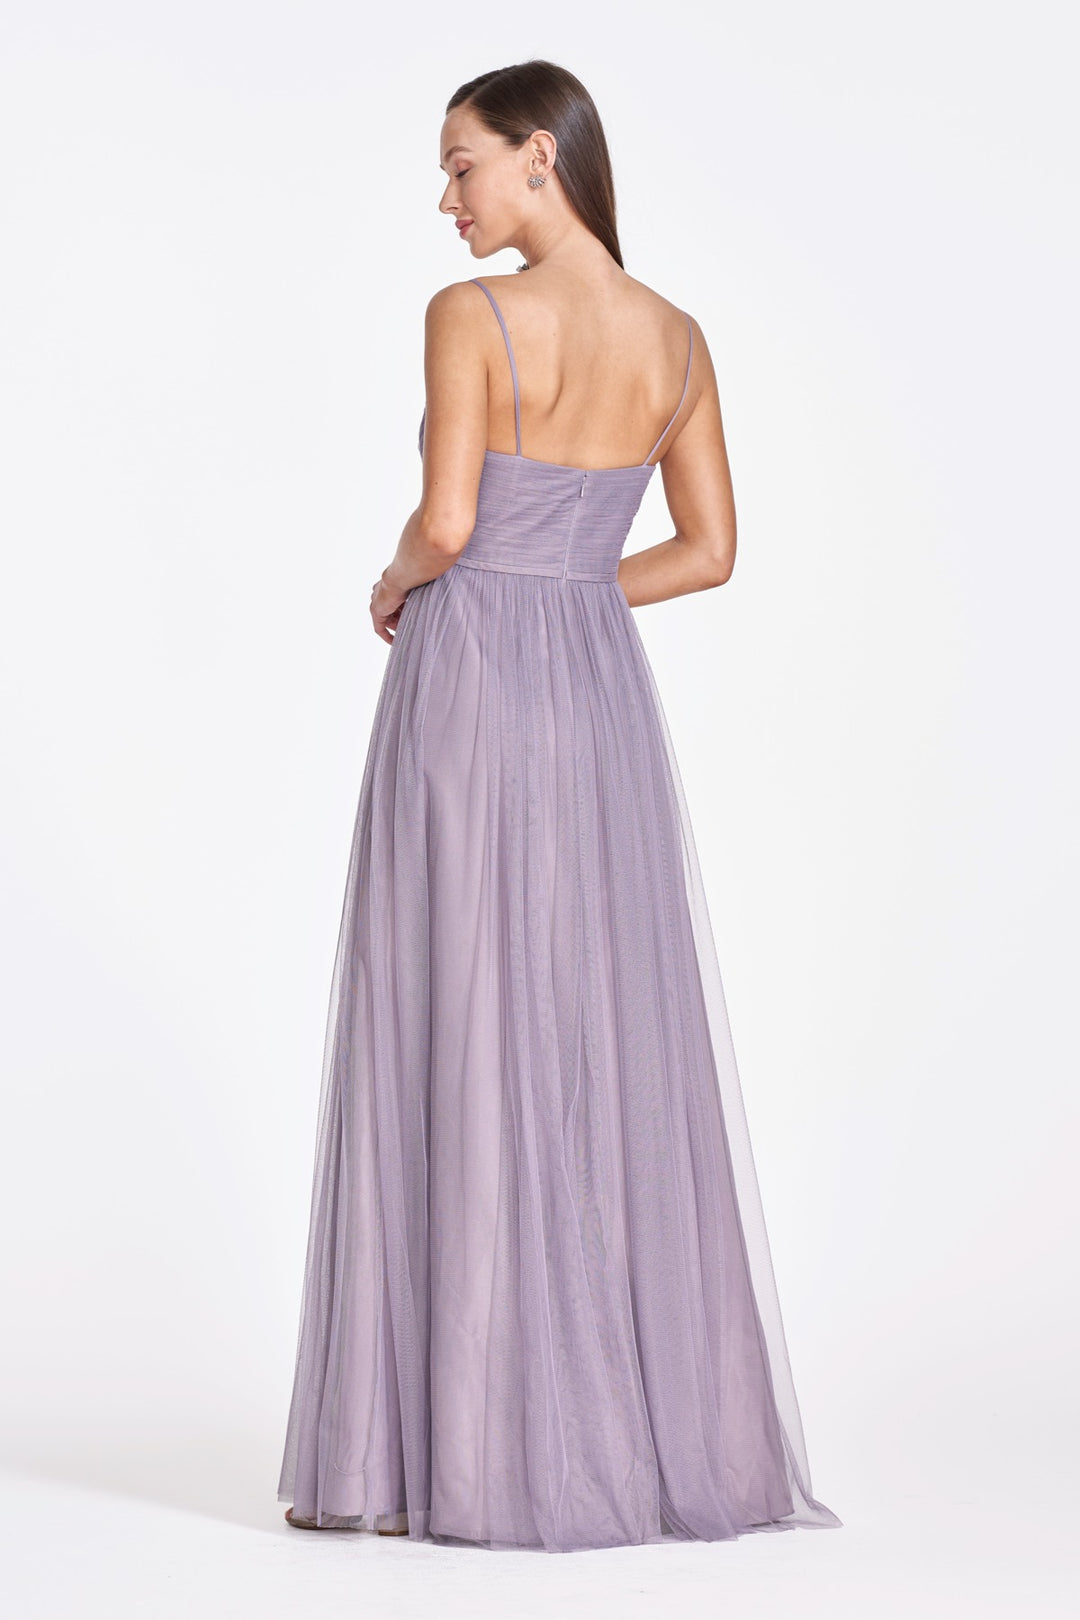 WTOO Dress Style 940 Size 10